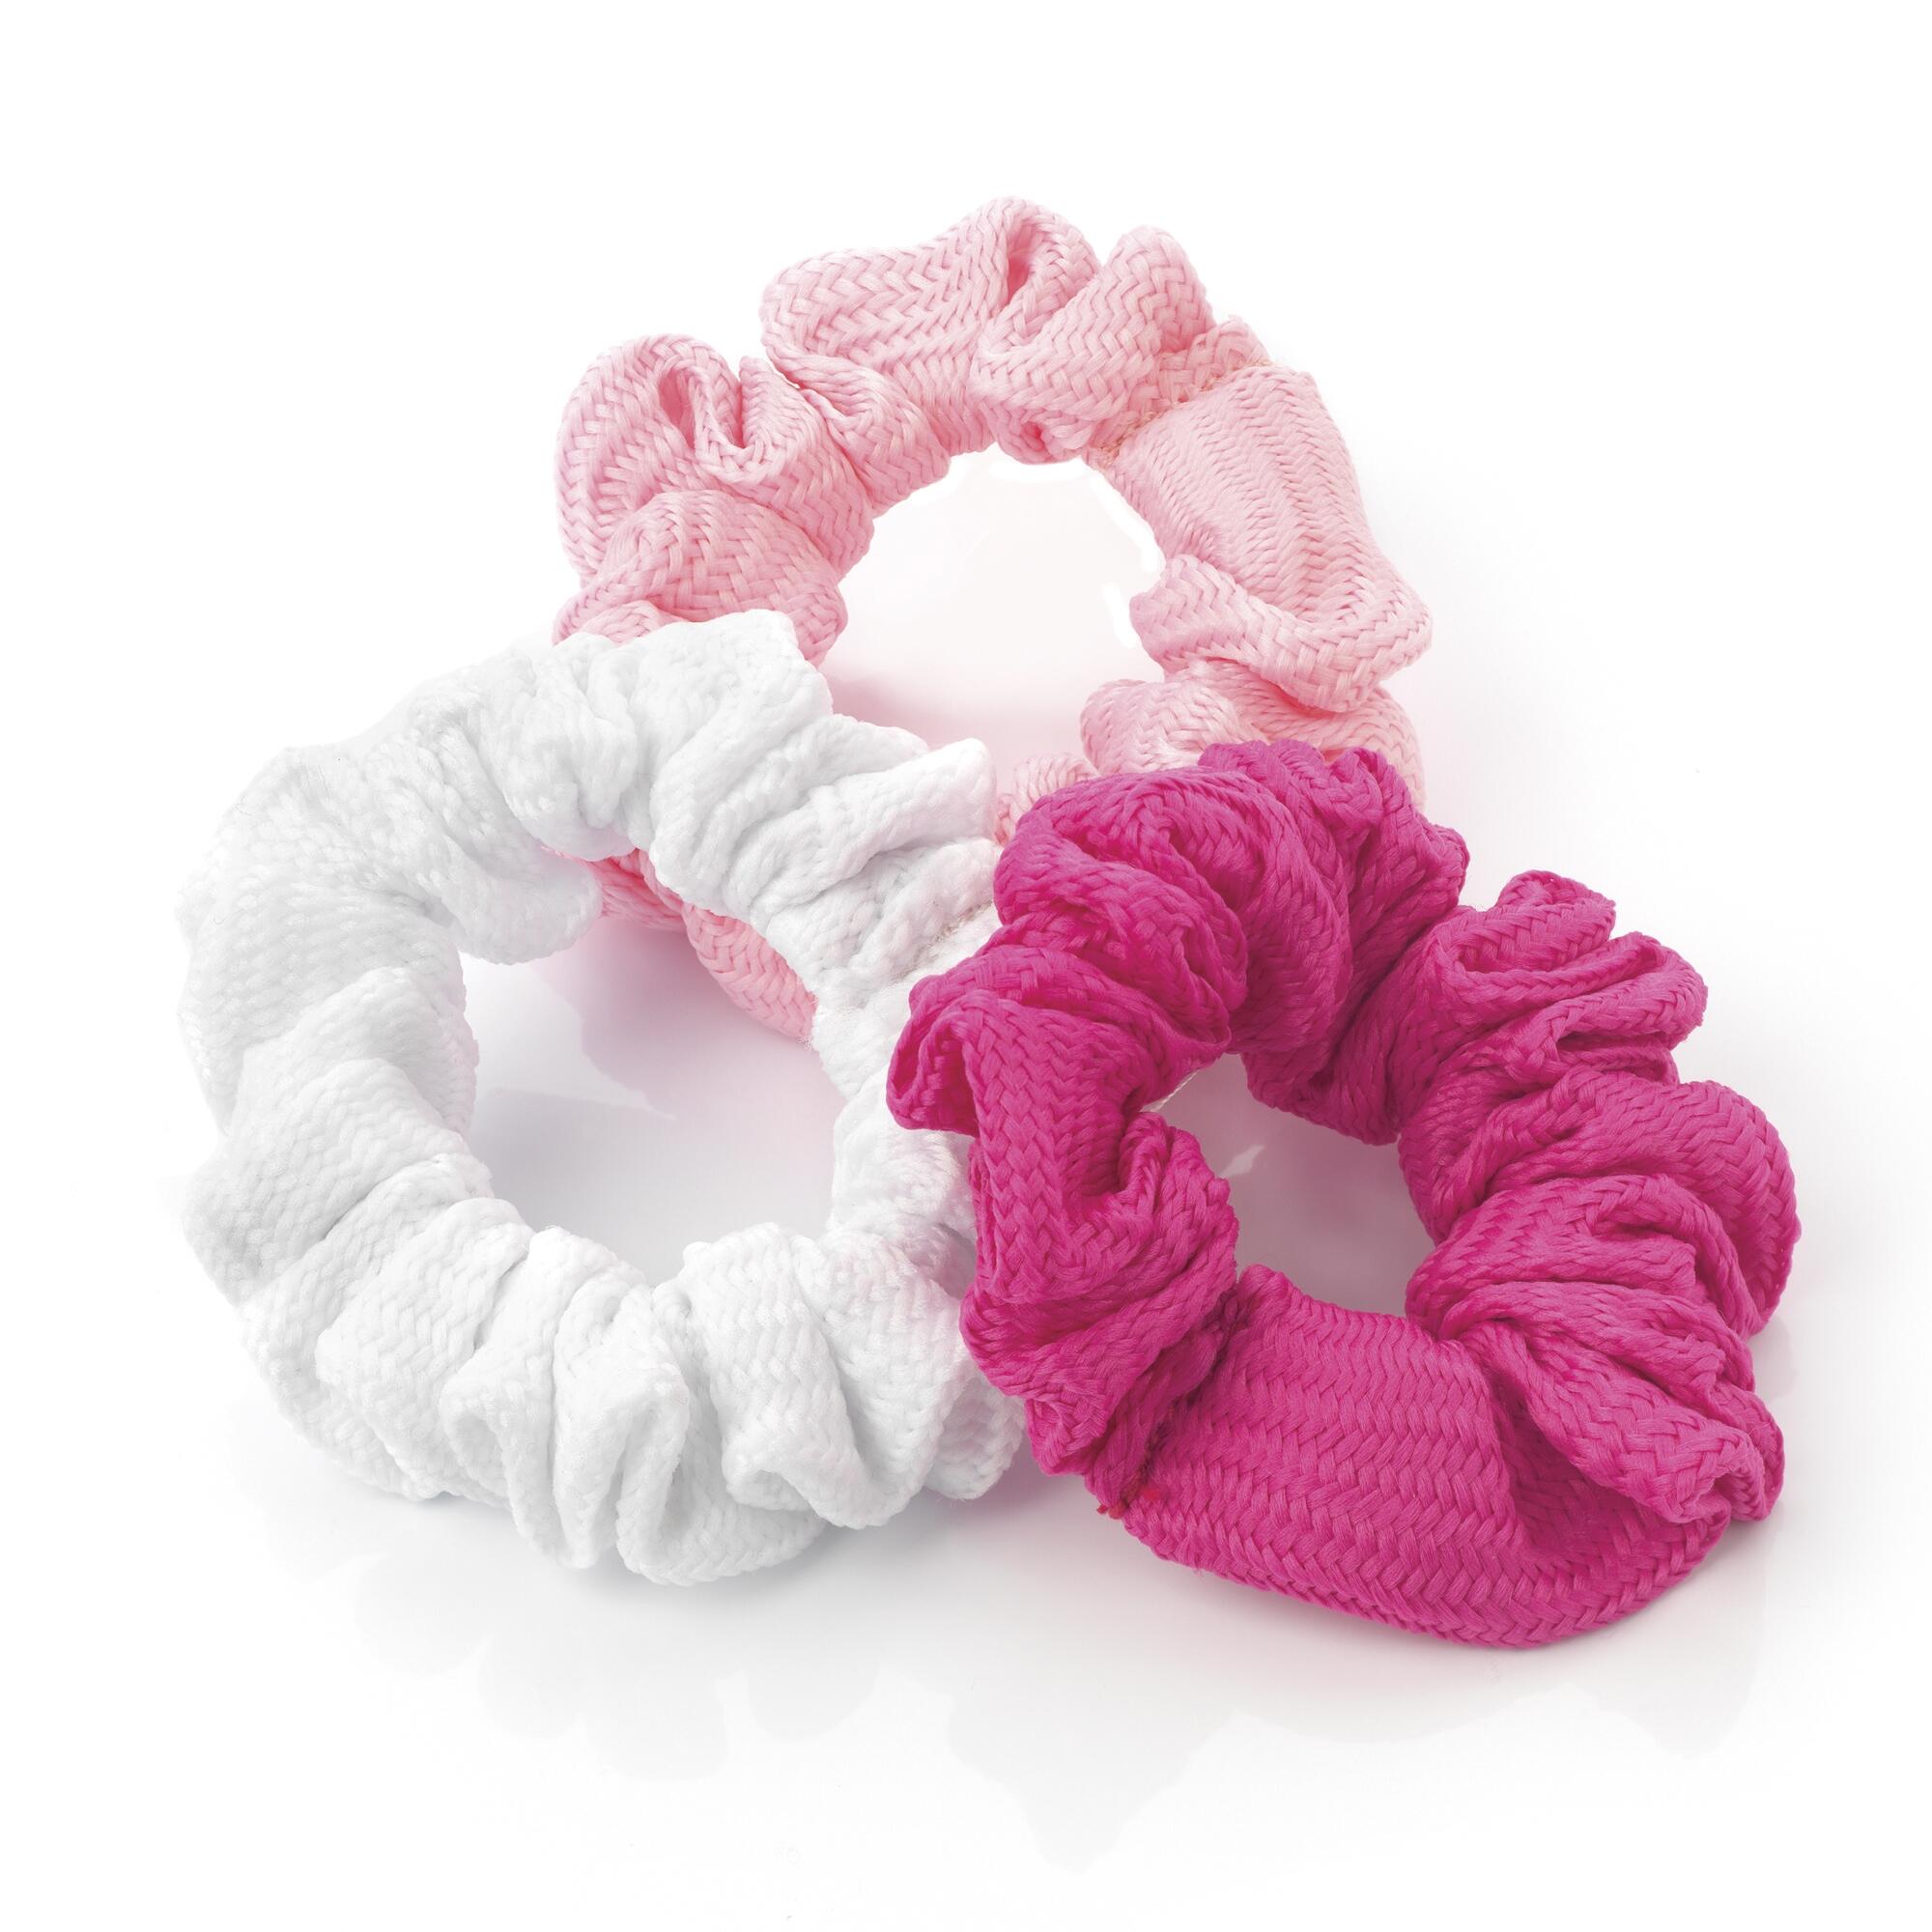 3 stk. hårelastikke i stof  pink, Rosa, hvid